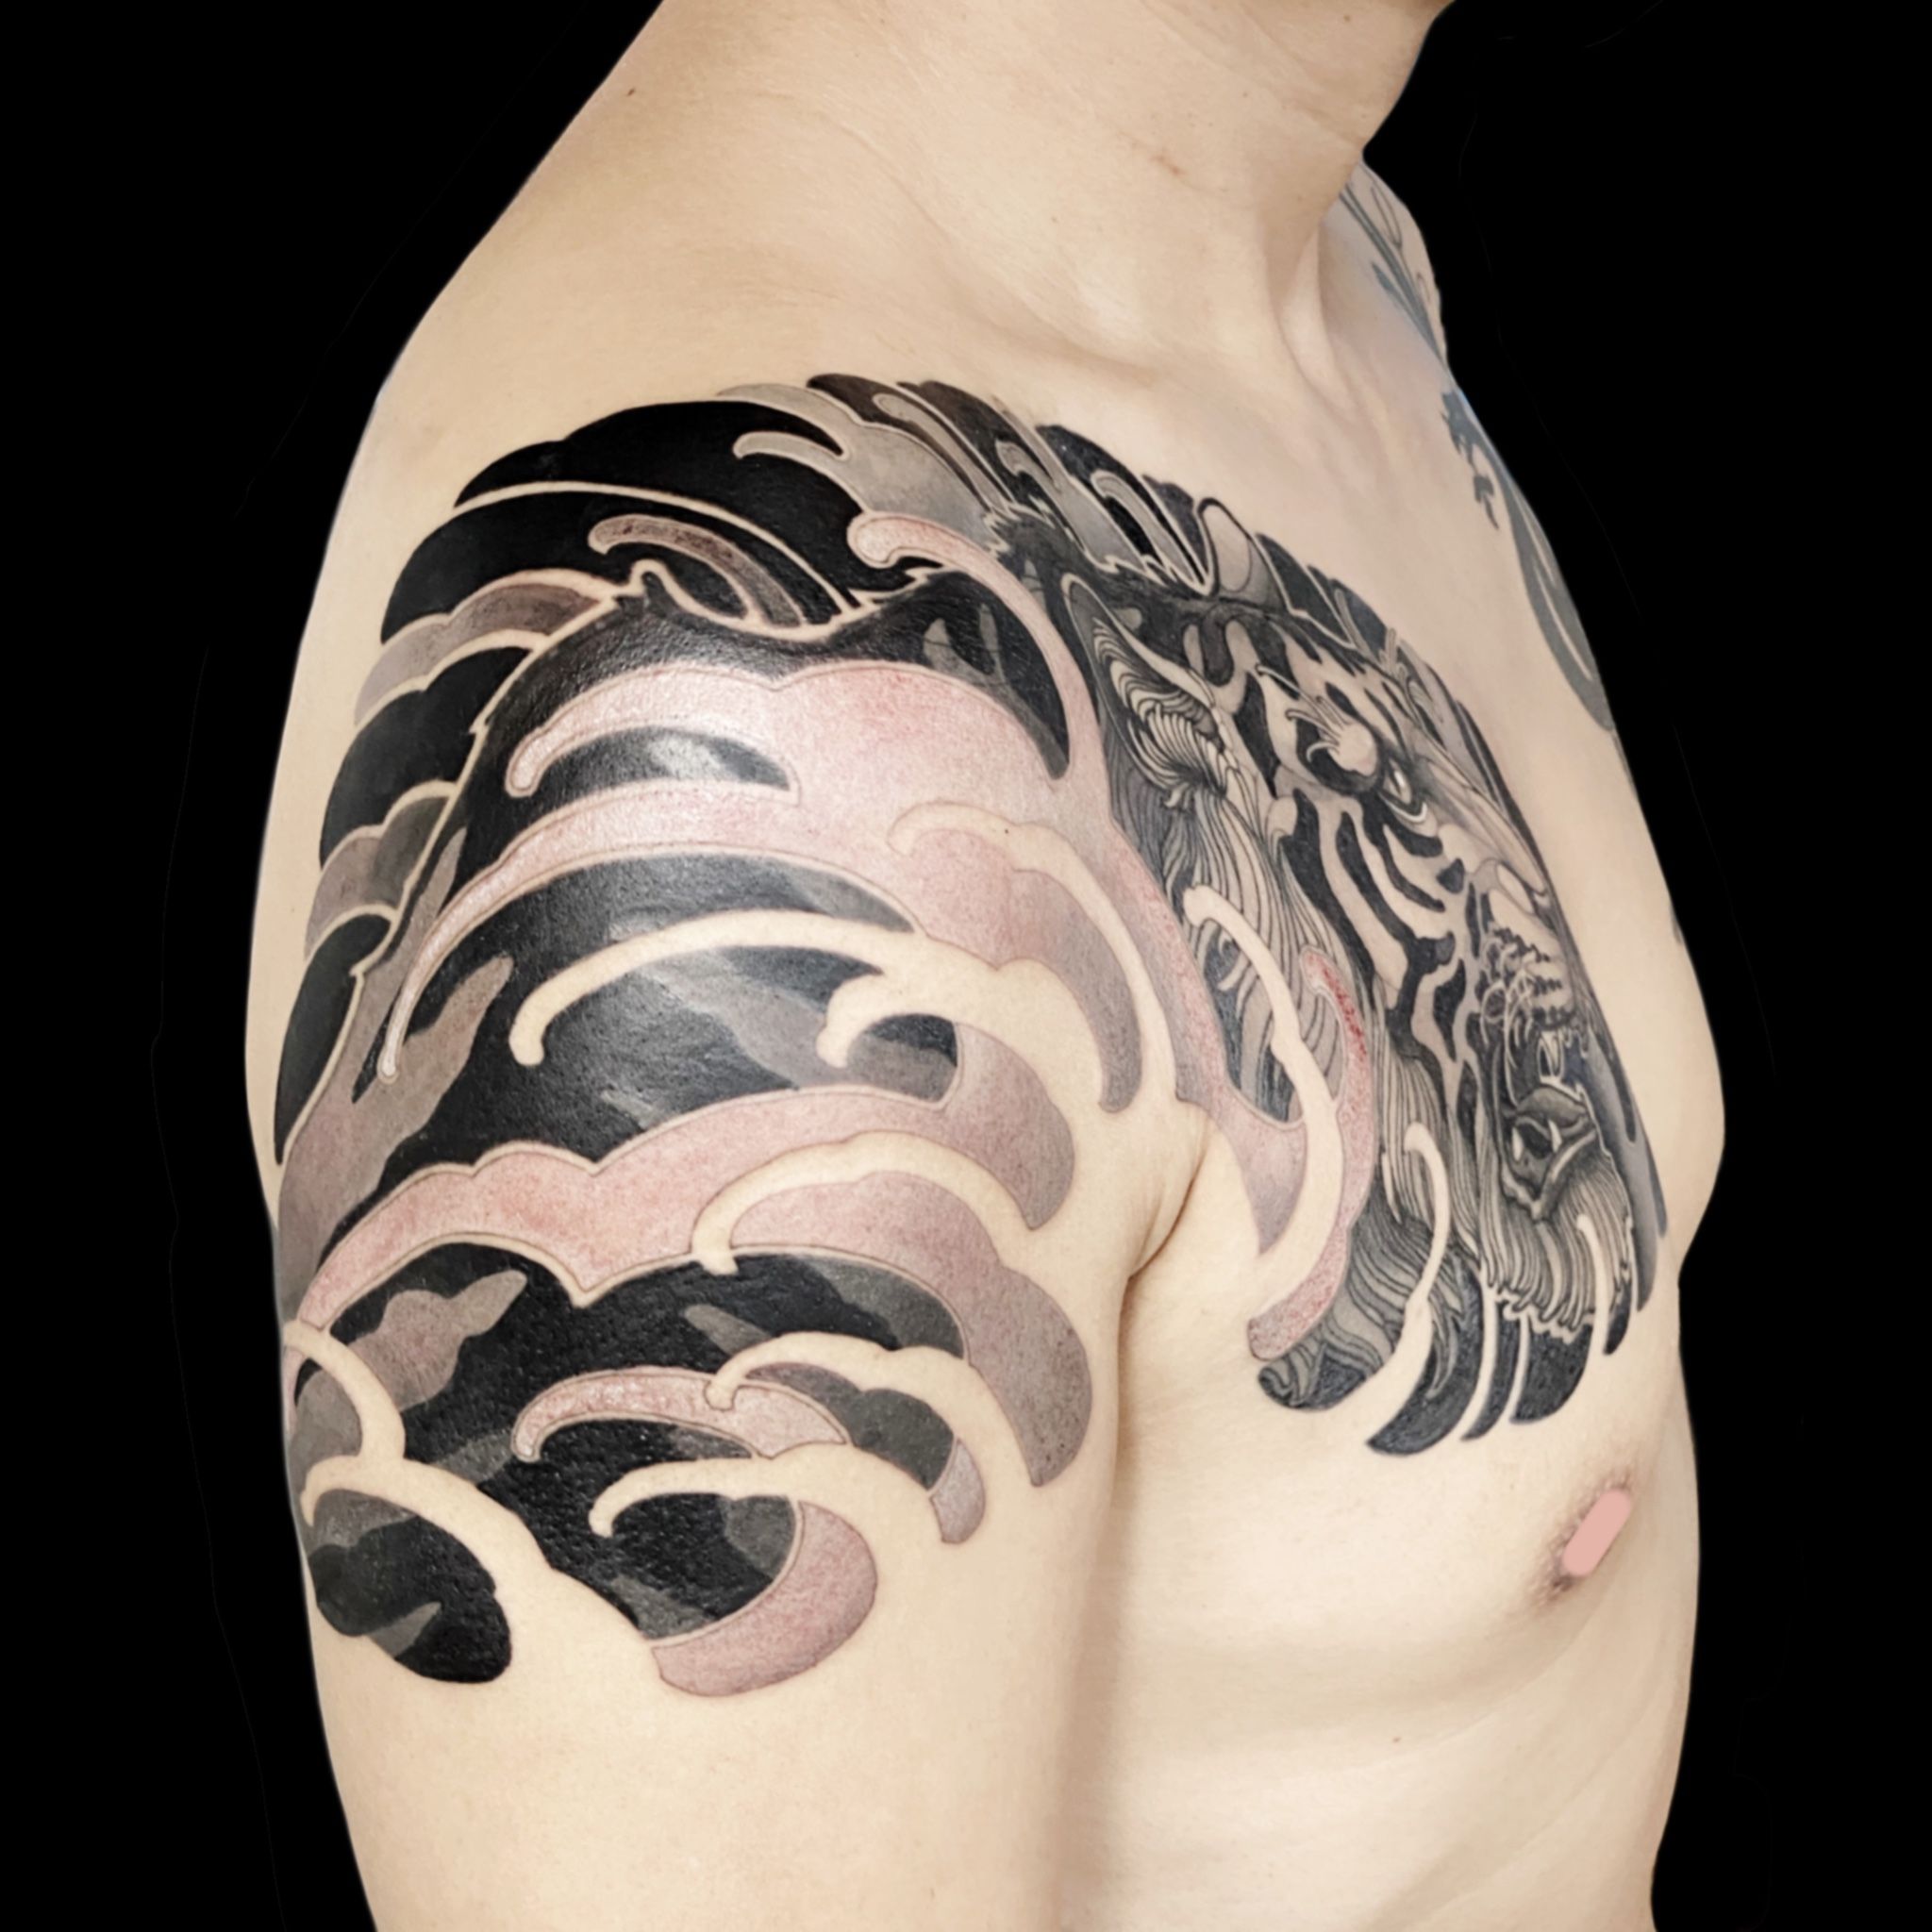 Details more than 74 japanese shoulder tattoo